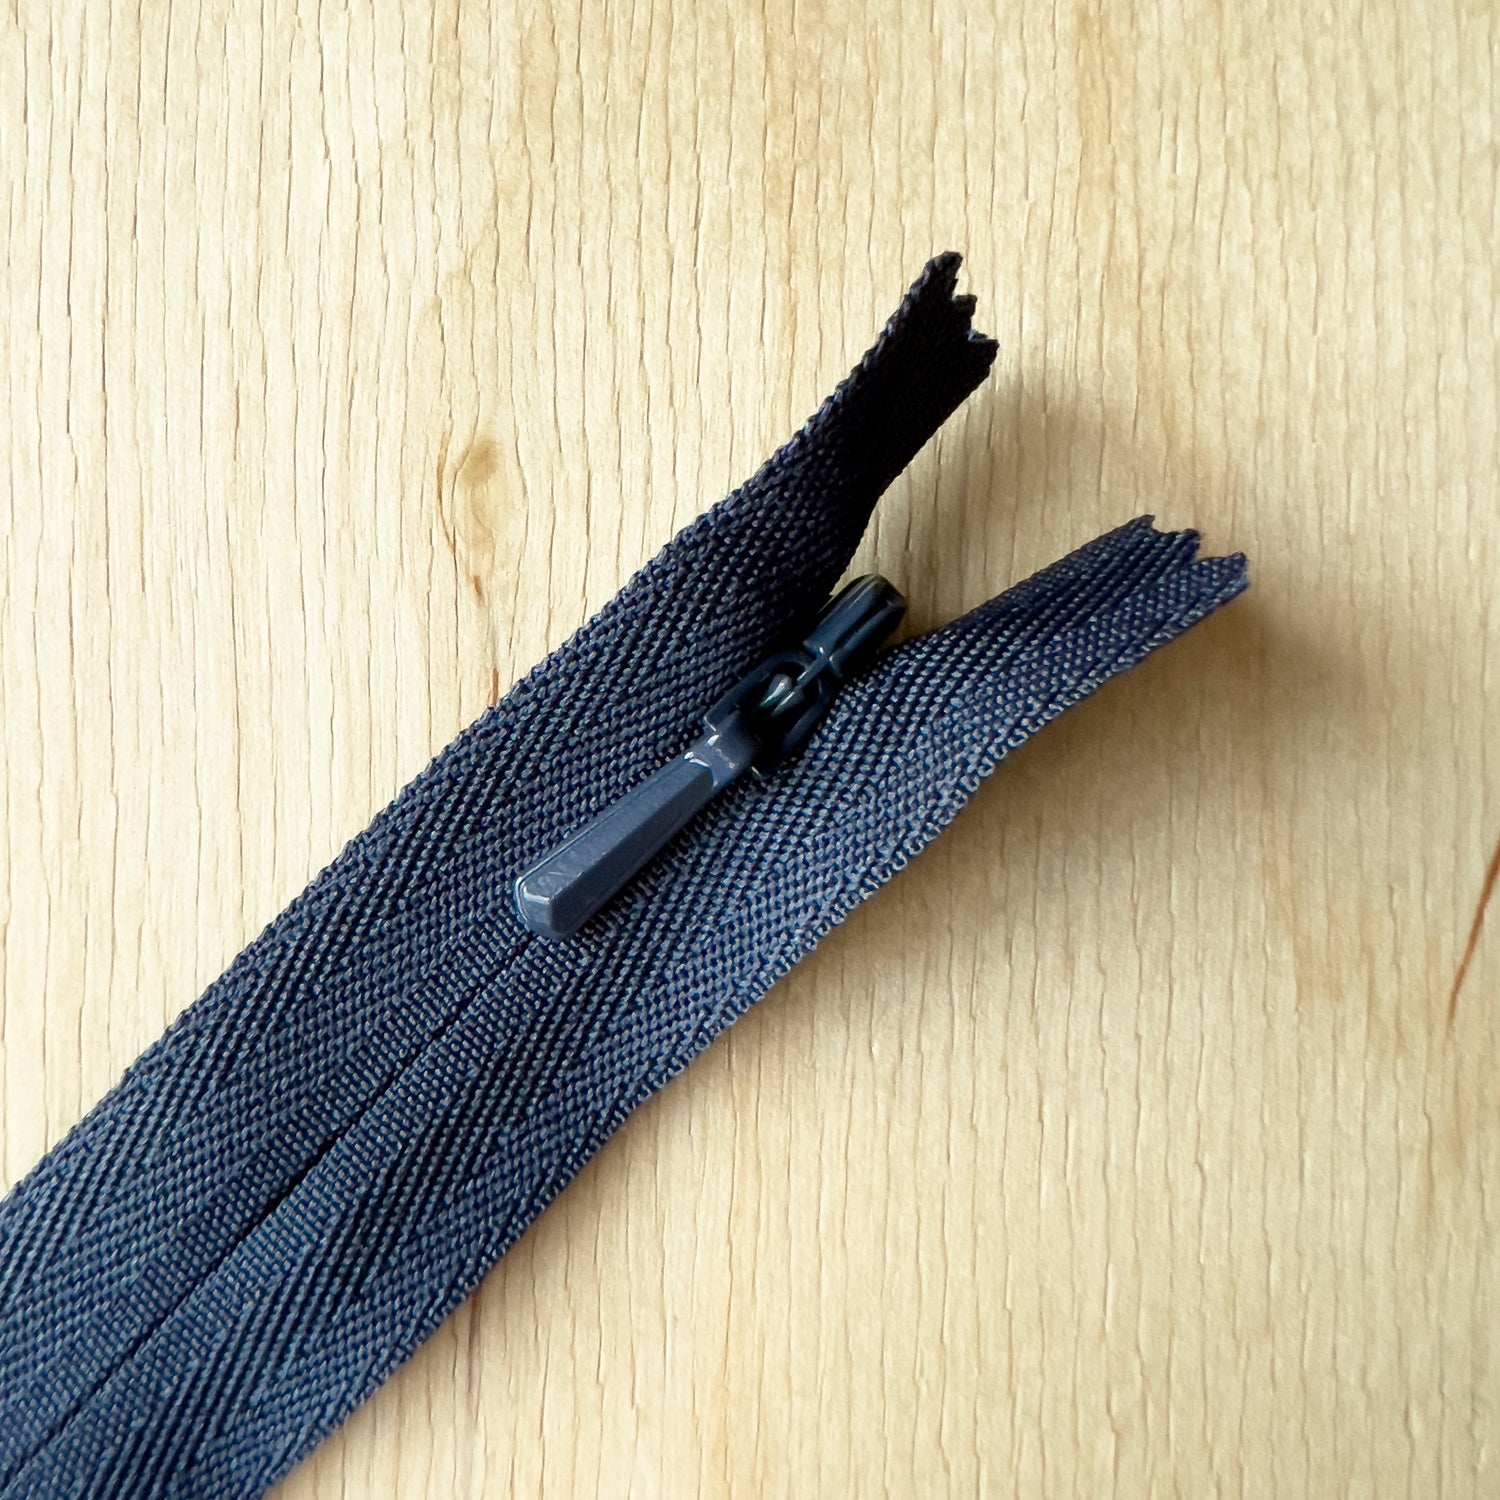  Nylon Coil Zippers,Invisible Zippers, 50pcs/lot 18cm